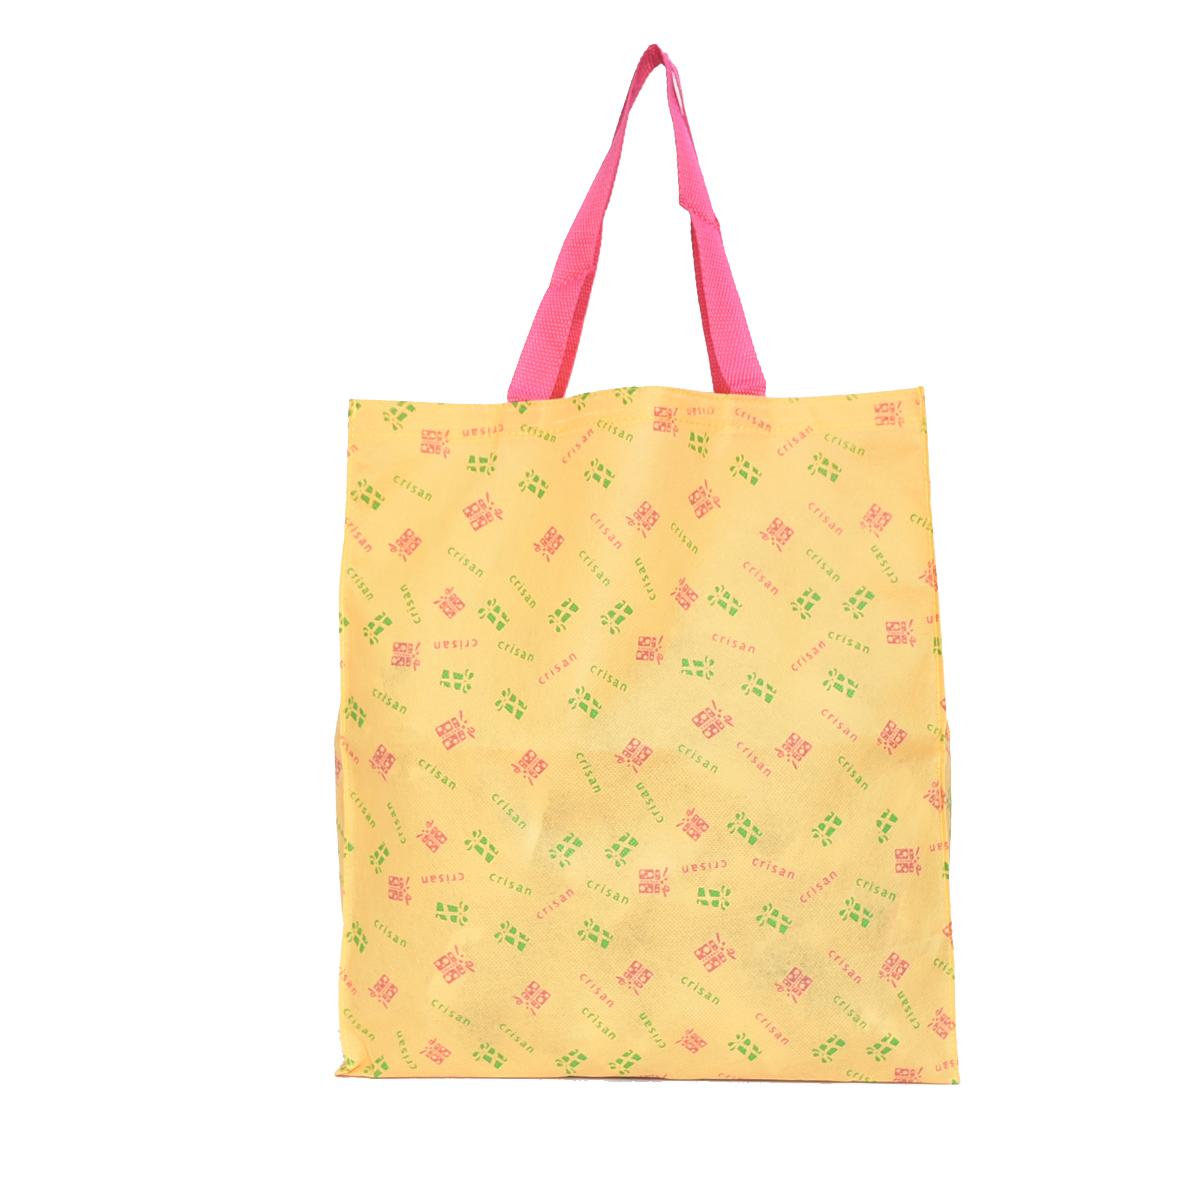 Crisan Bags - Eco bag-Crisan bags